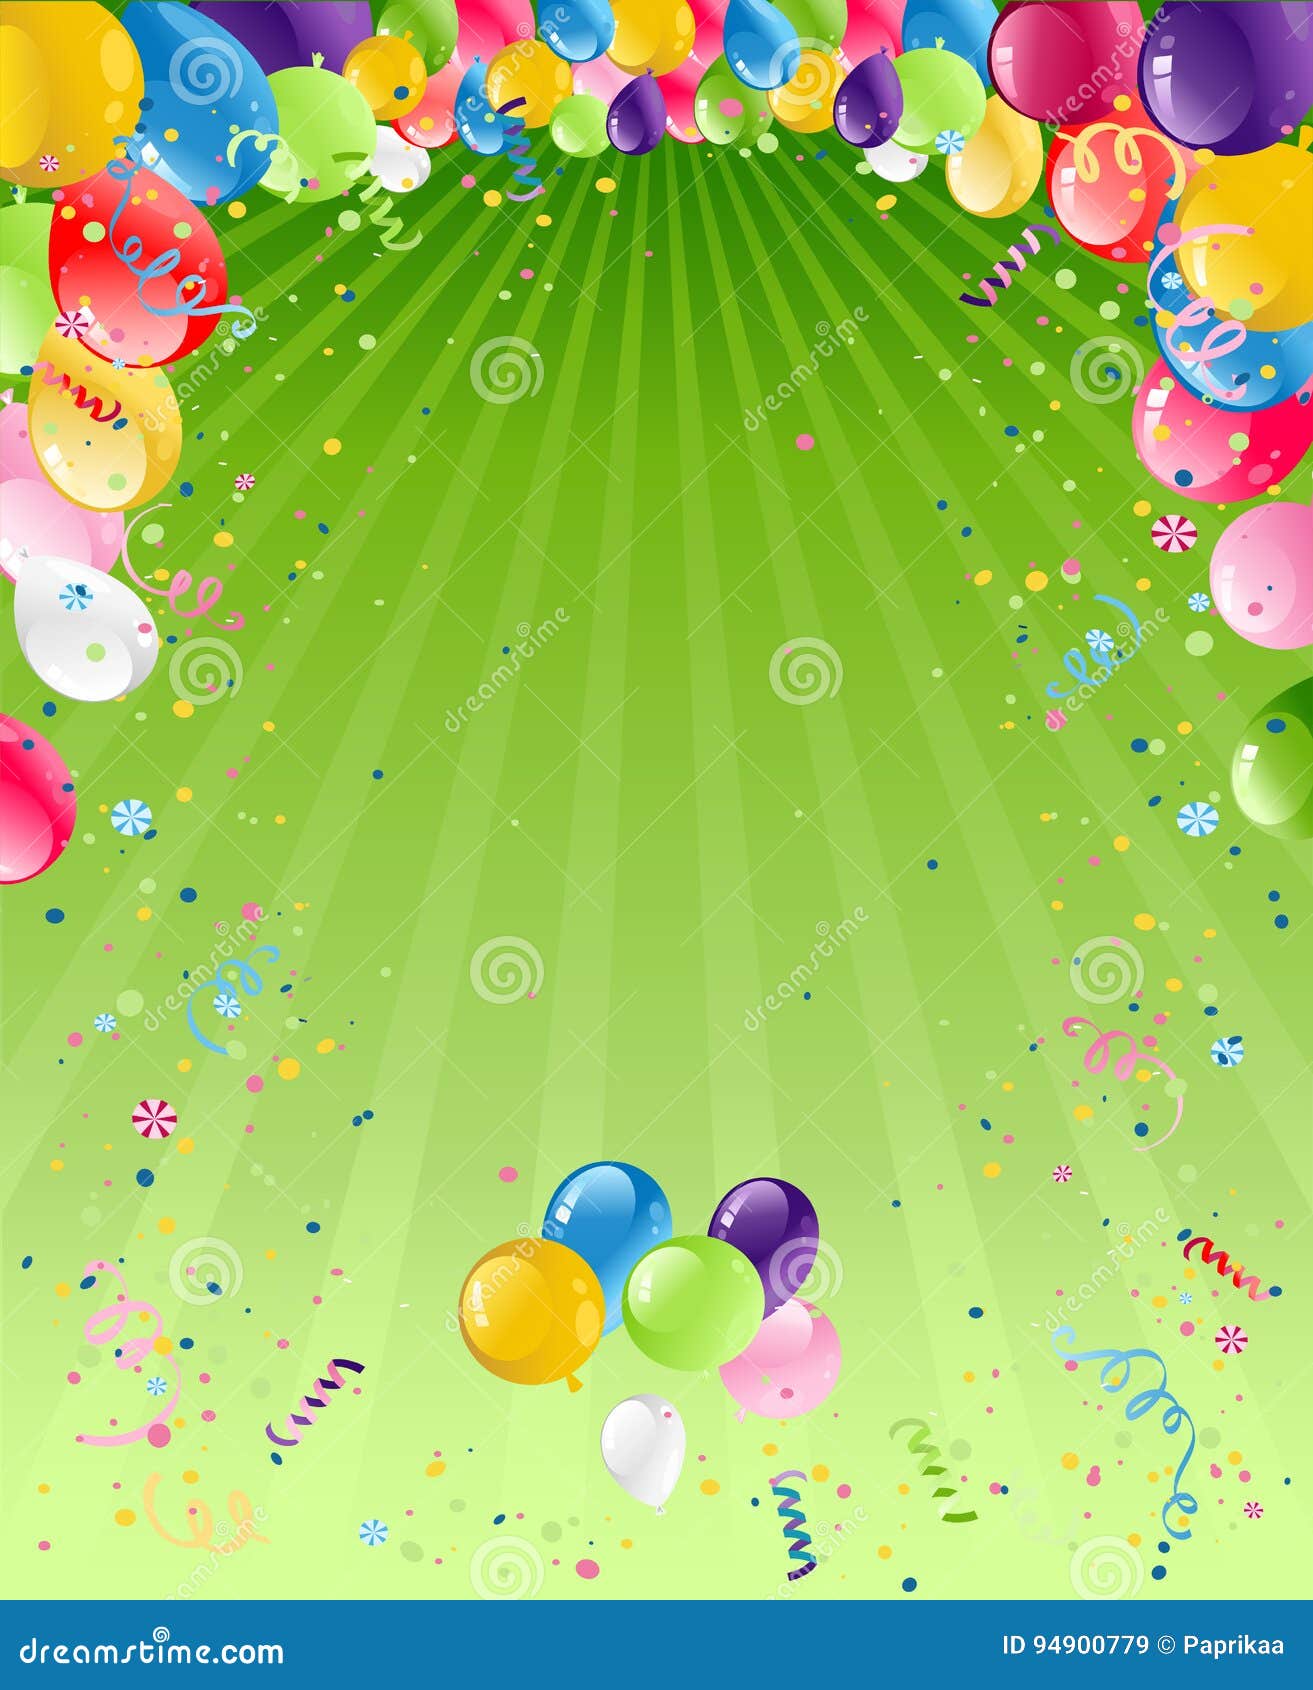 Balloons on green card stock vector. Illustration of birthday - 94900779